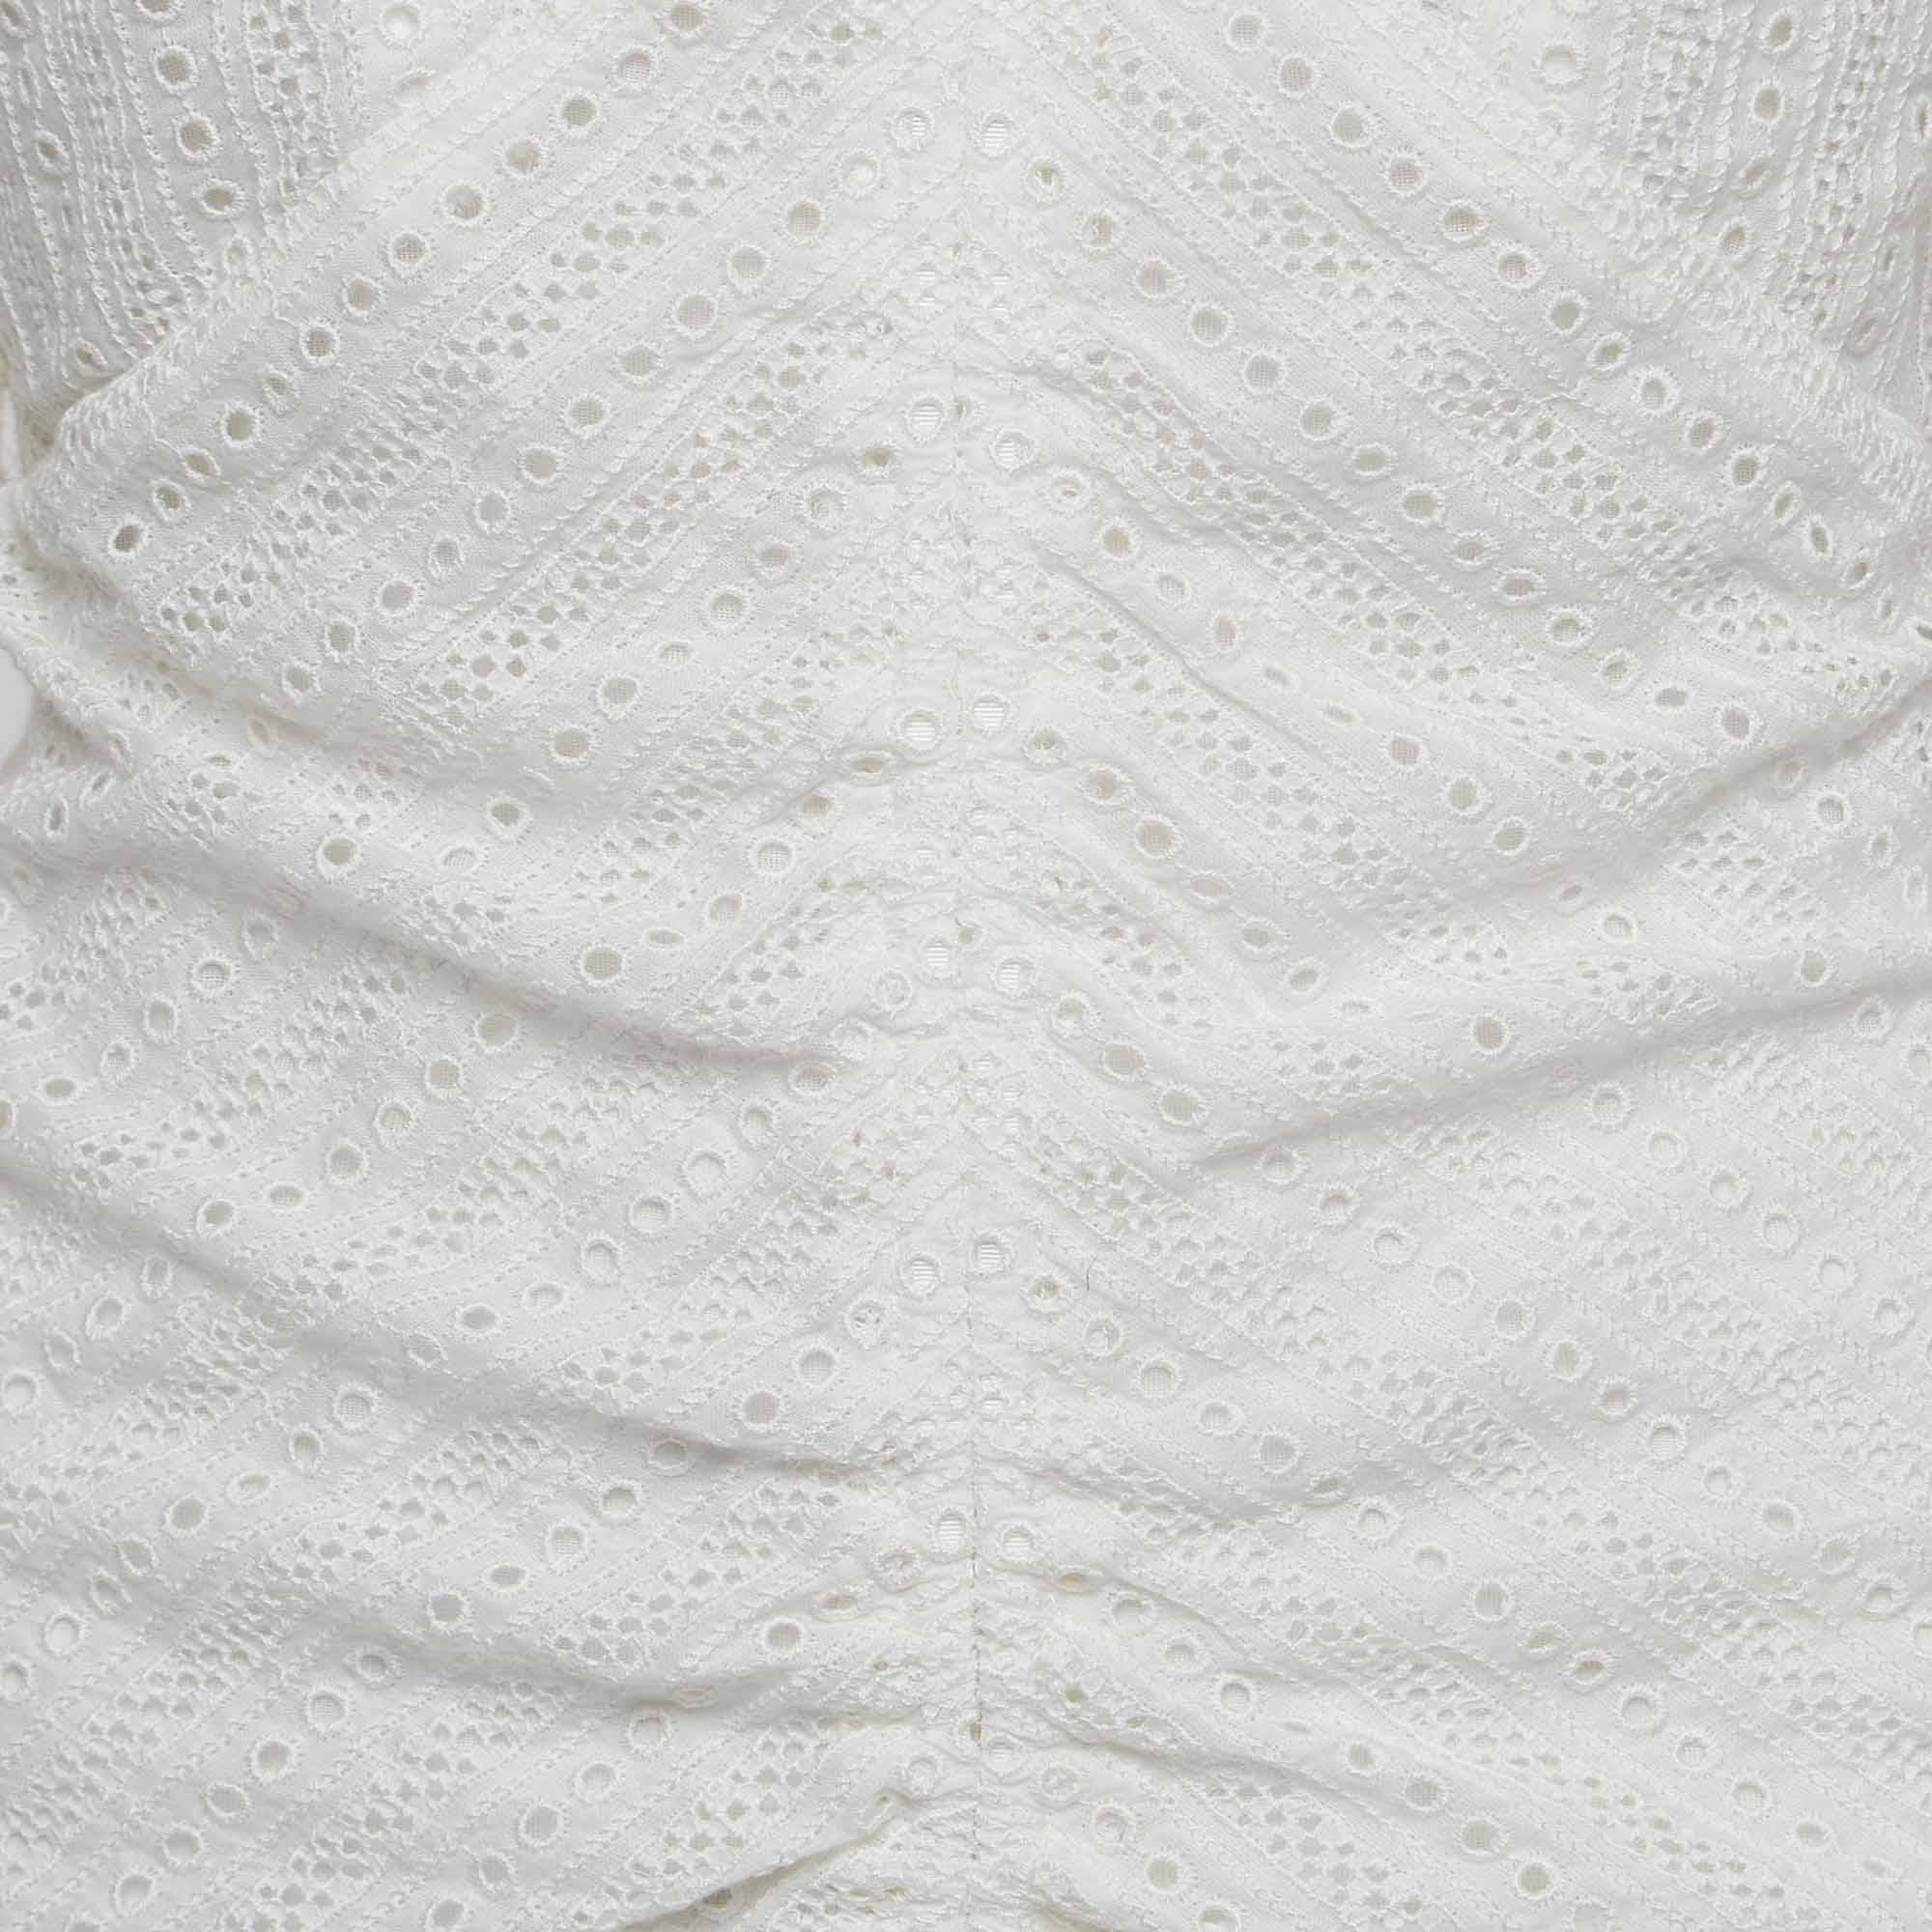 Isabel Marant White Eyelet Cotton Ruched Mini Dress S In Excellent Condition For Sale In Dubai, Al Qouz 2